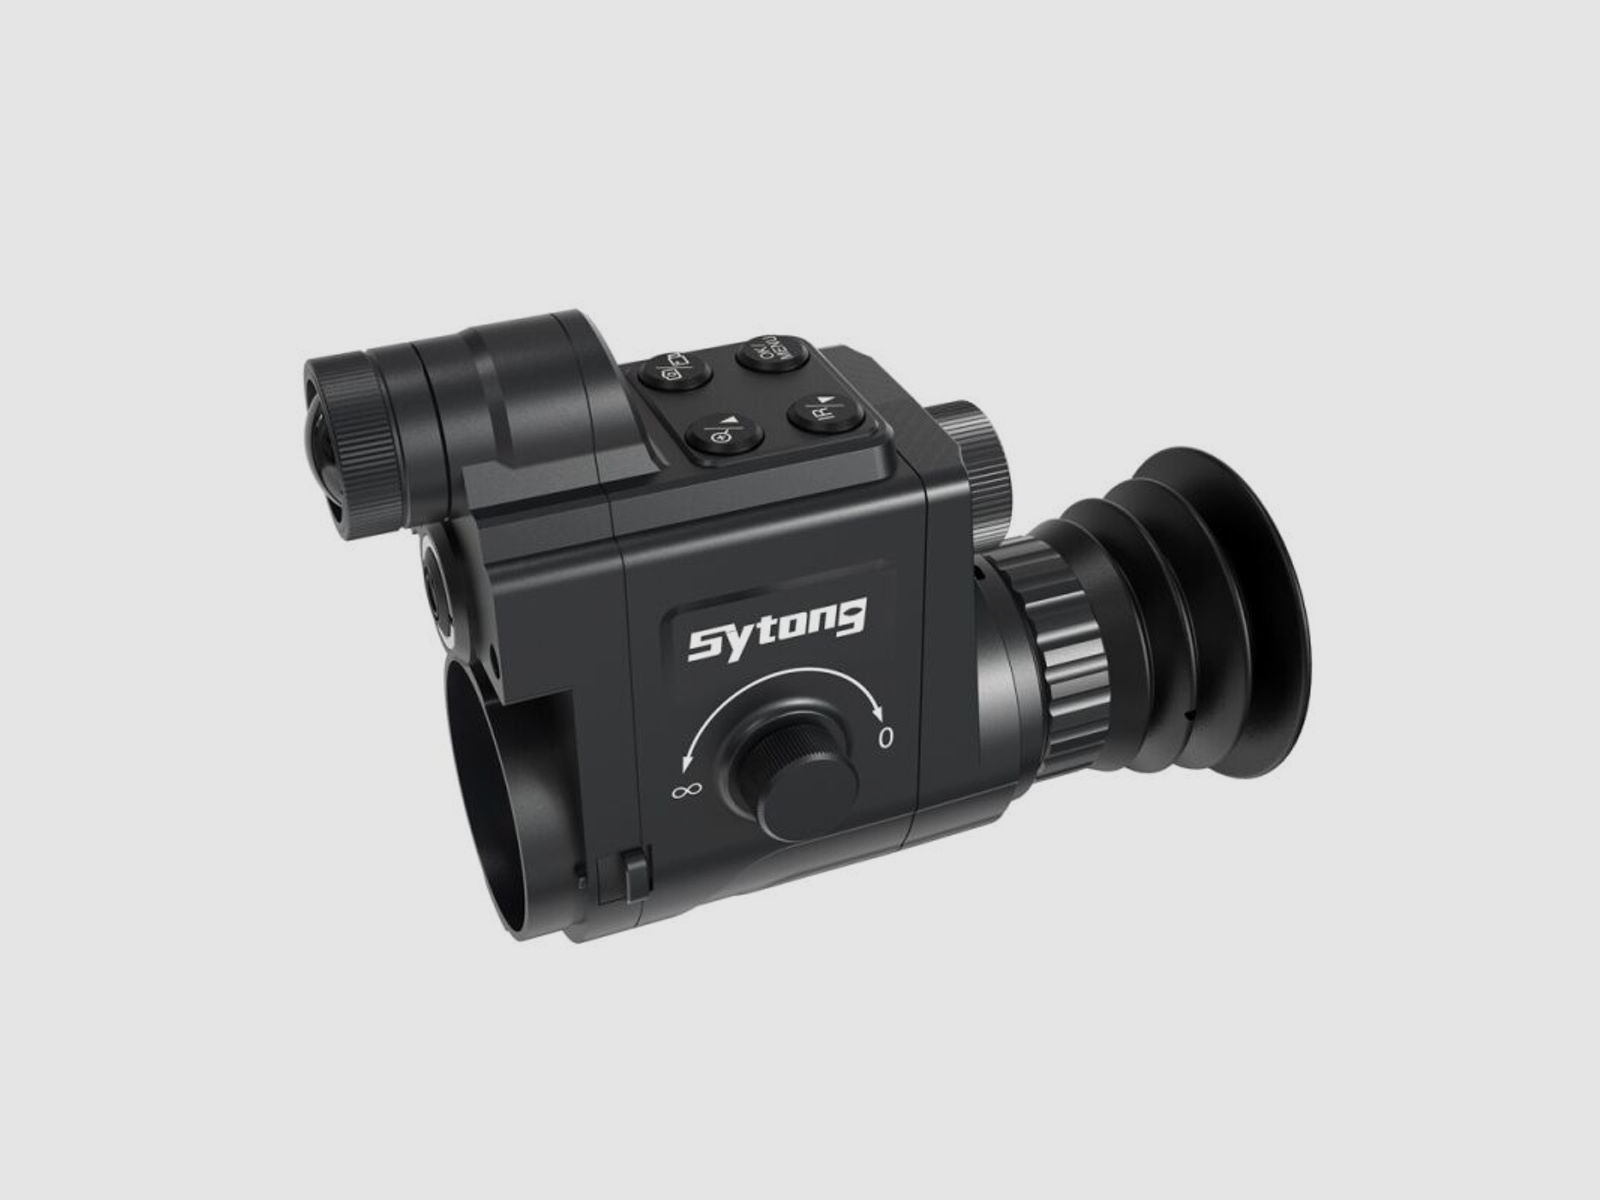 Sytong	 HT-77 German-Edition mit 16mm Linse - Nachtsichtgerät +Universal Schnell-Adapter